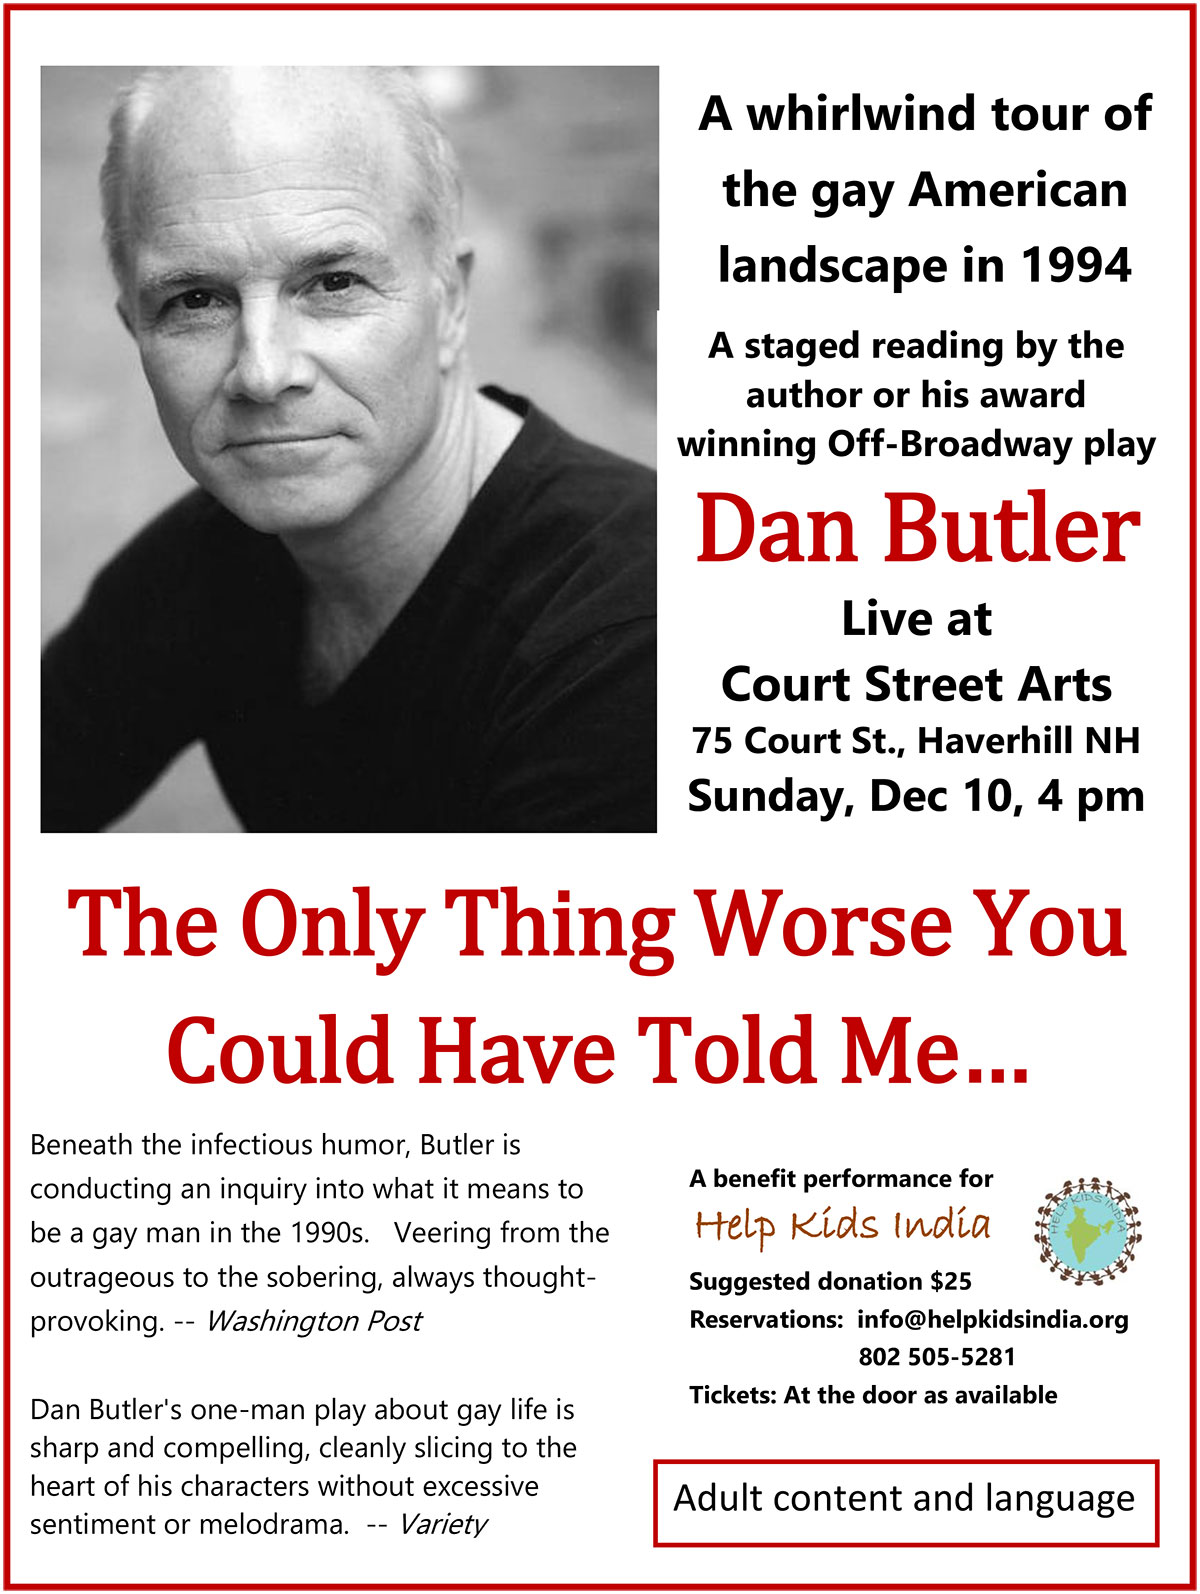 Dan Butler event information